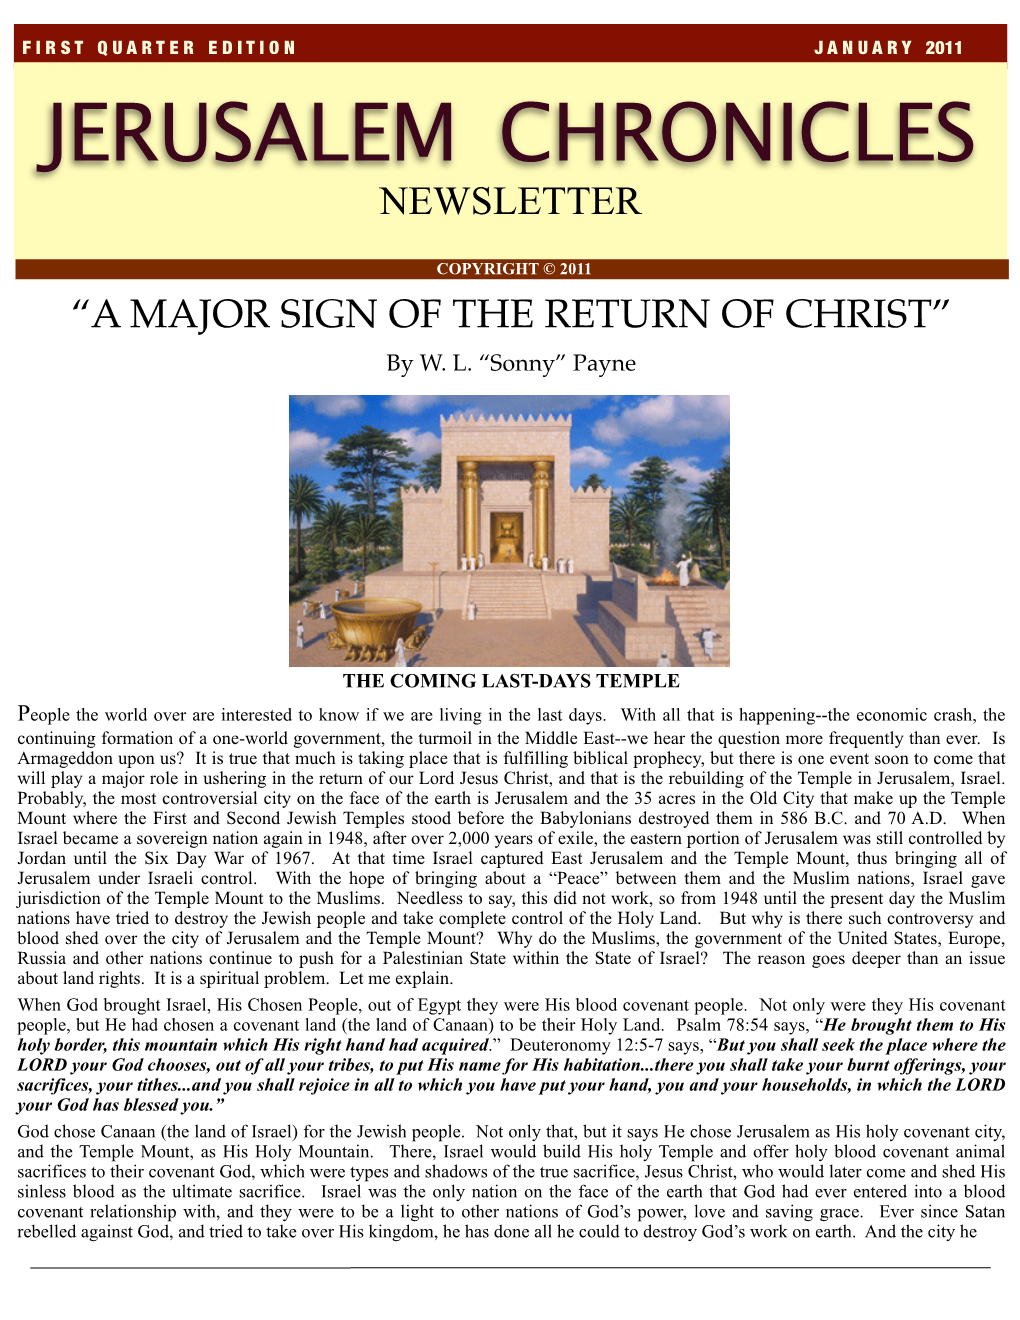 Jerusalem Chronicles Newsletter